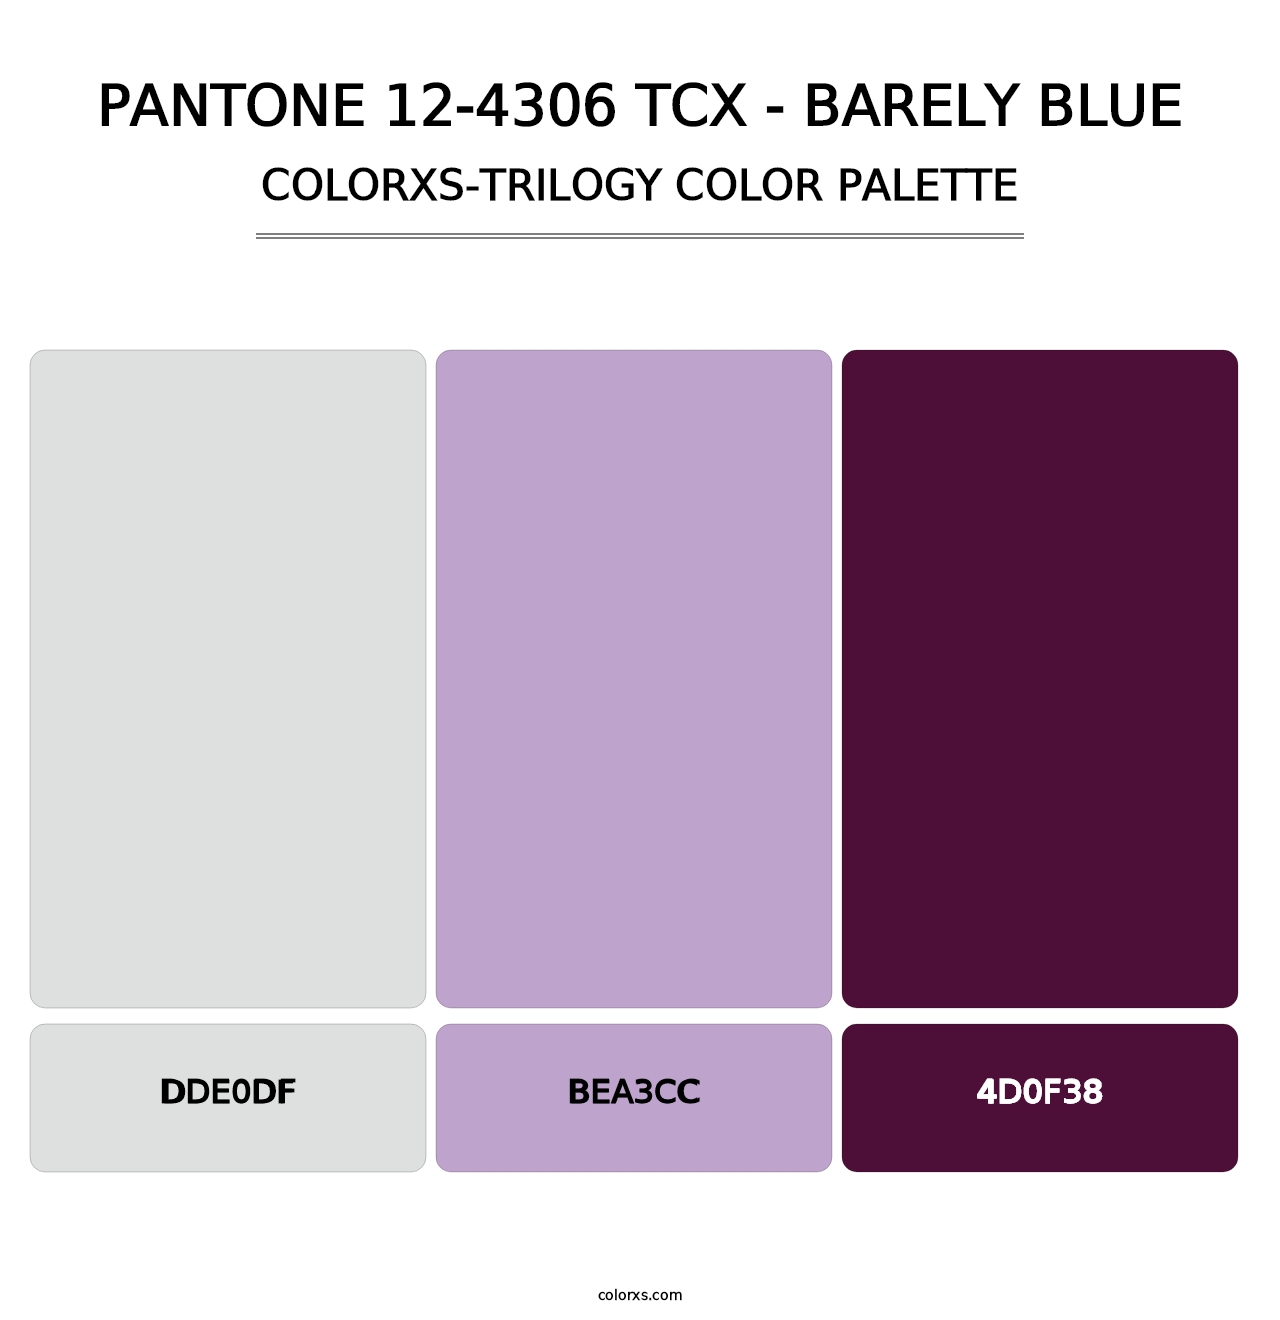 PANTONE 12-4306 TCX - Barely Blue - Colorxs Trilogy Palette